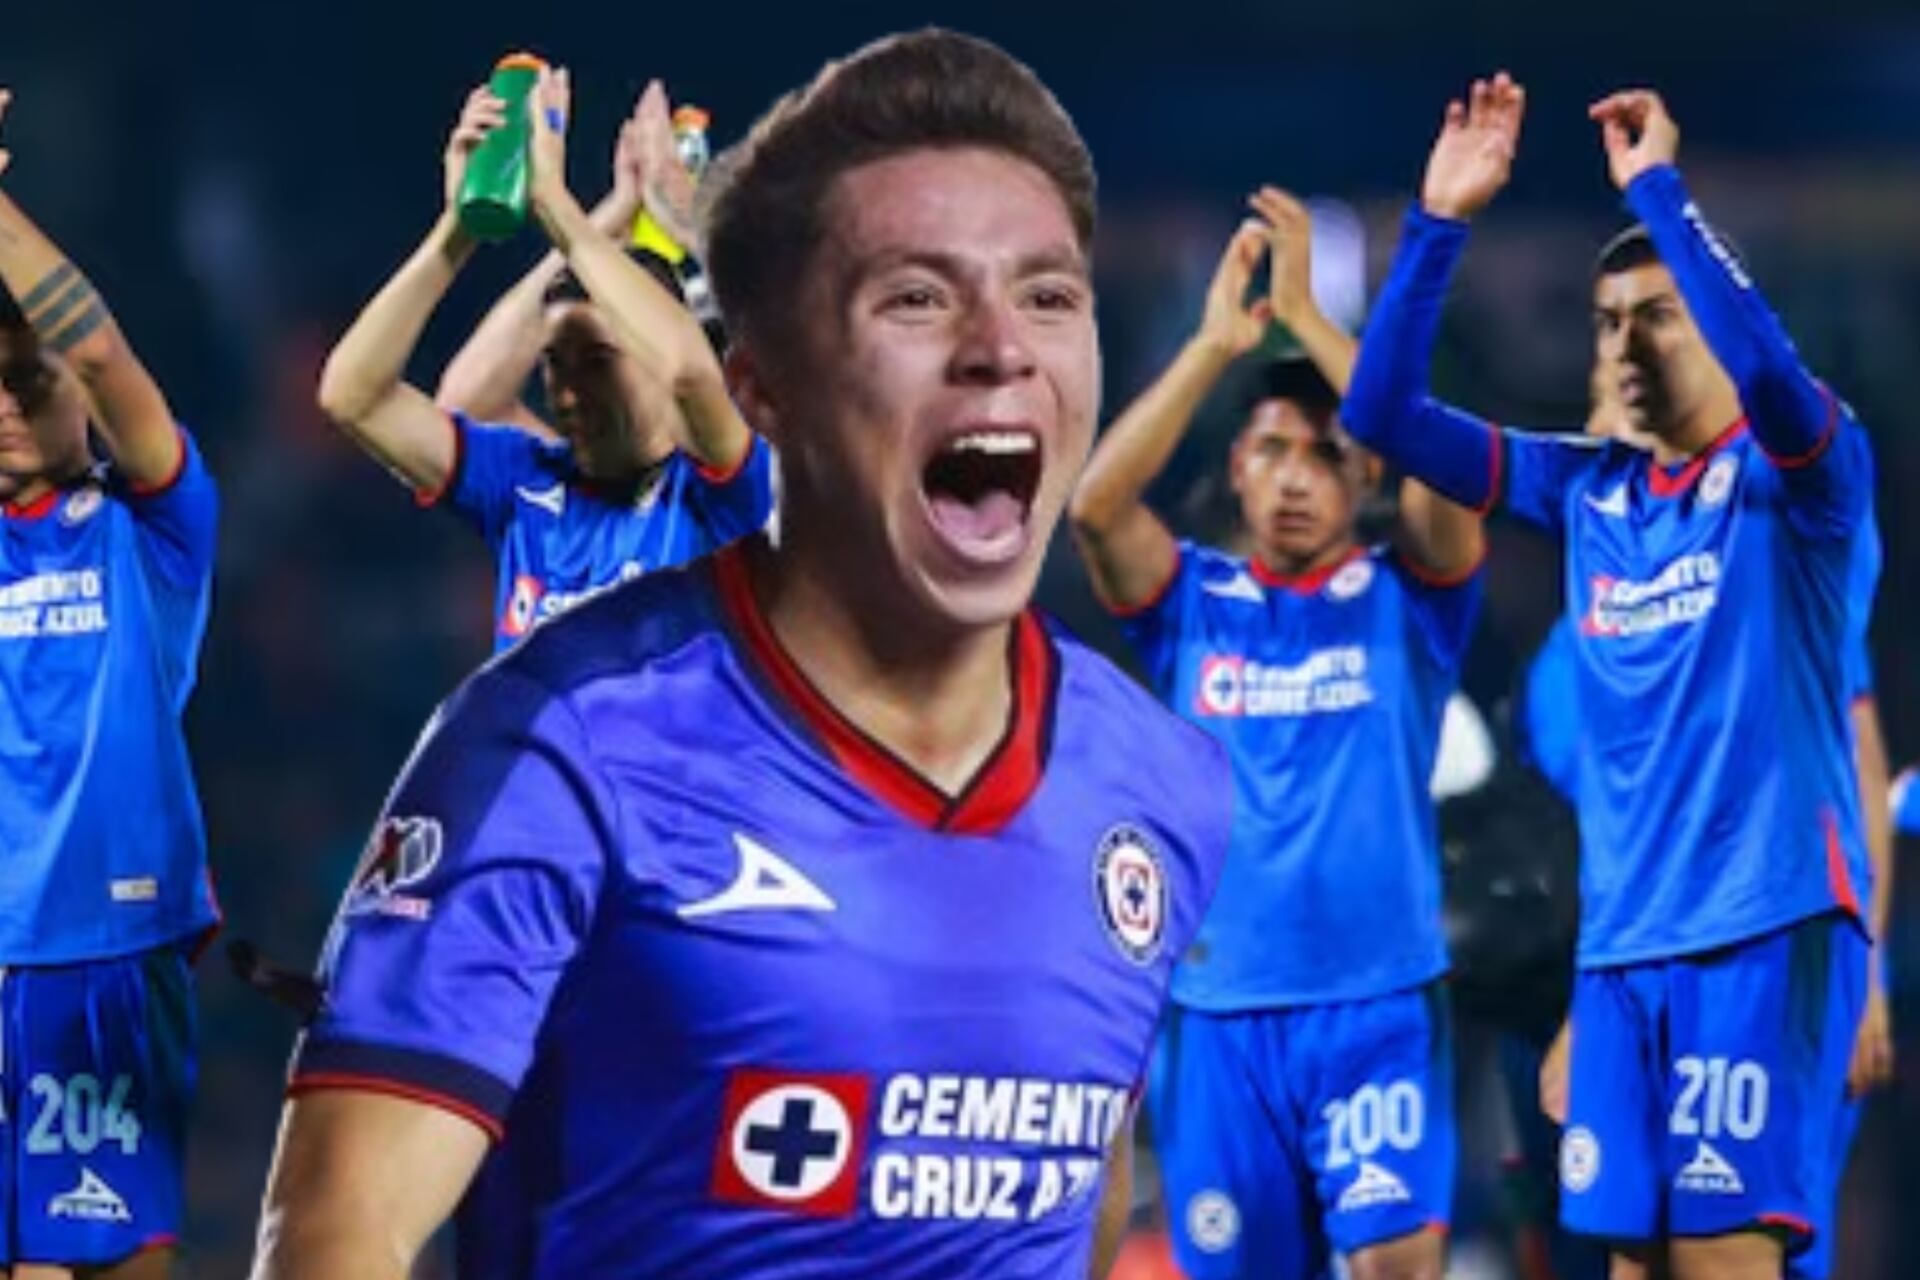 La decisión de Cruz Azul sobre renovar a Huescas, tras imperial partido vs Pumas